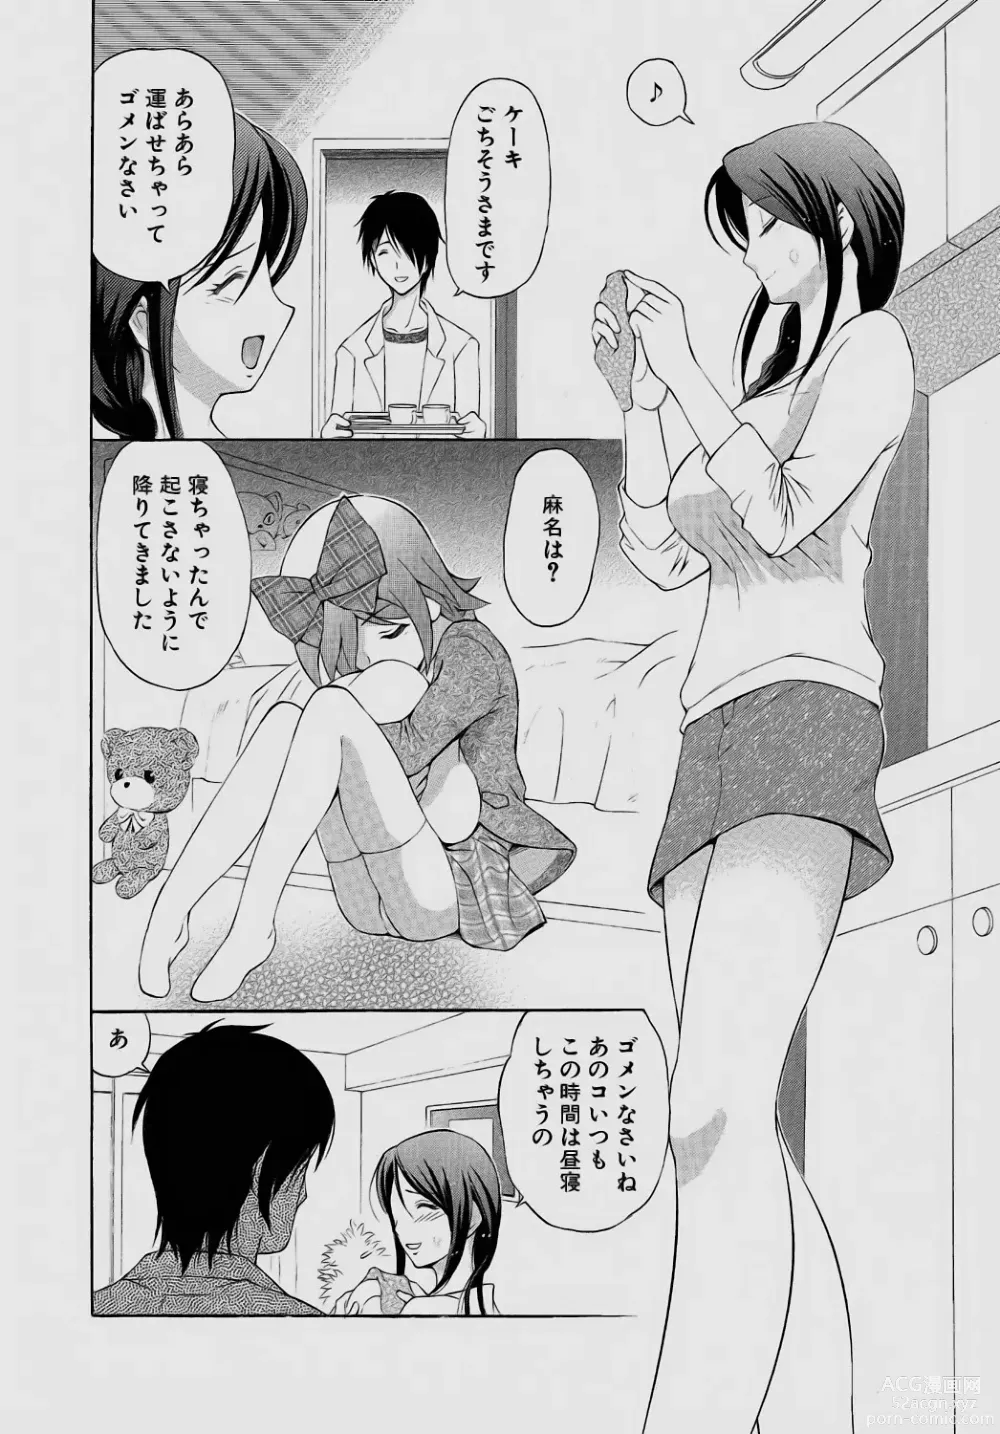 Page 8 of manga Sareruga MaMa